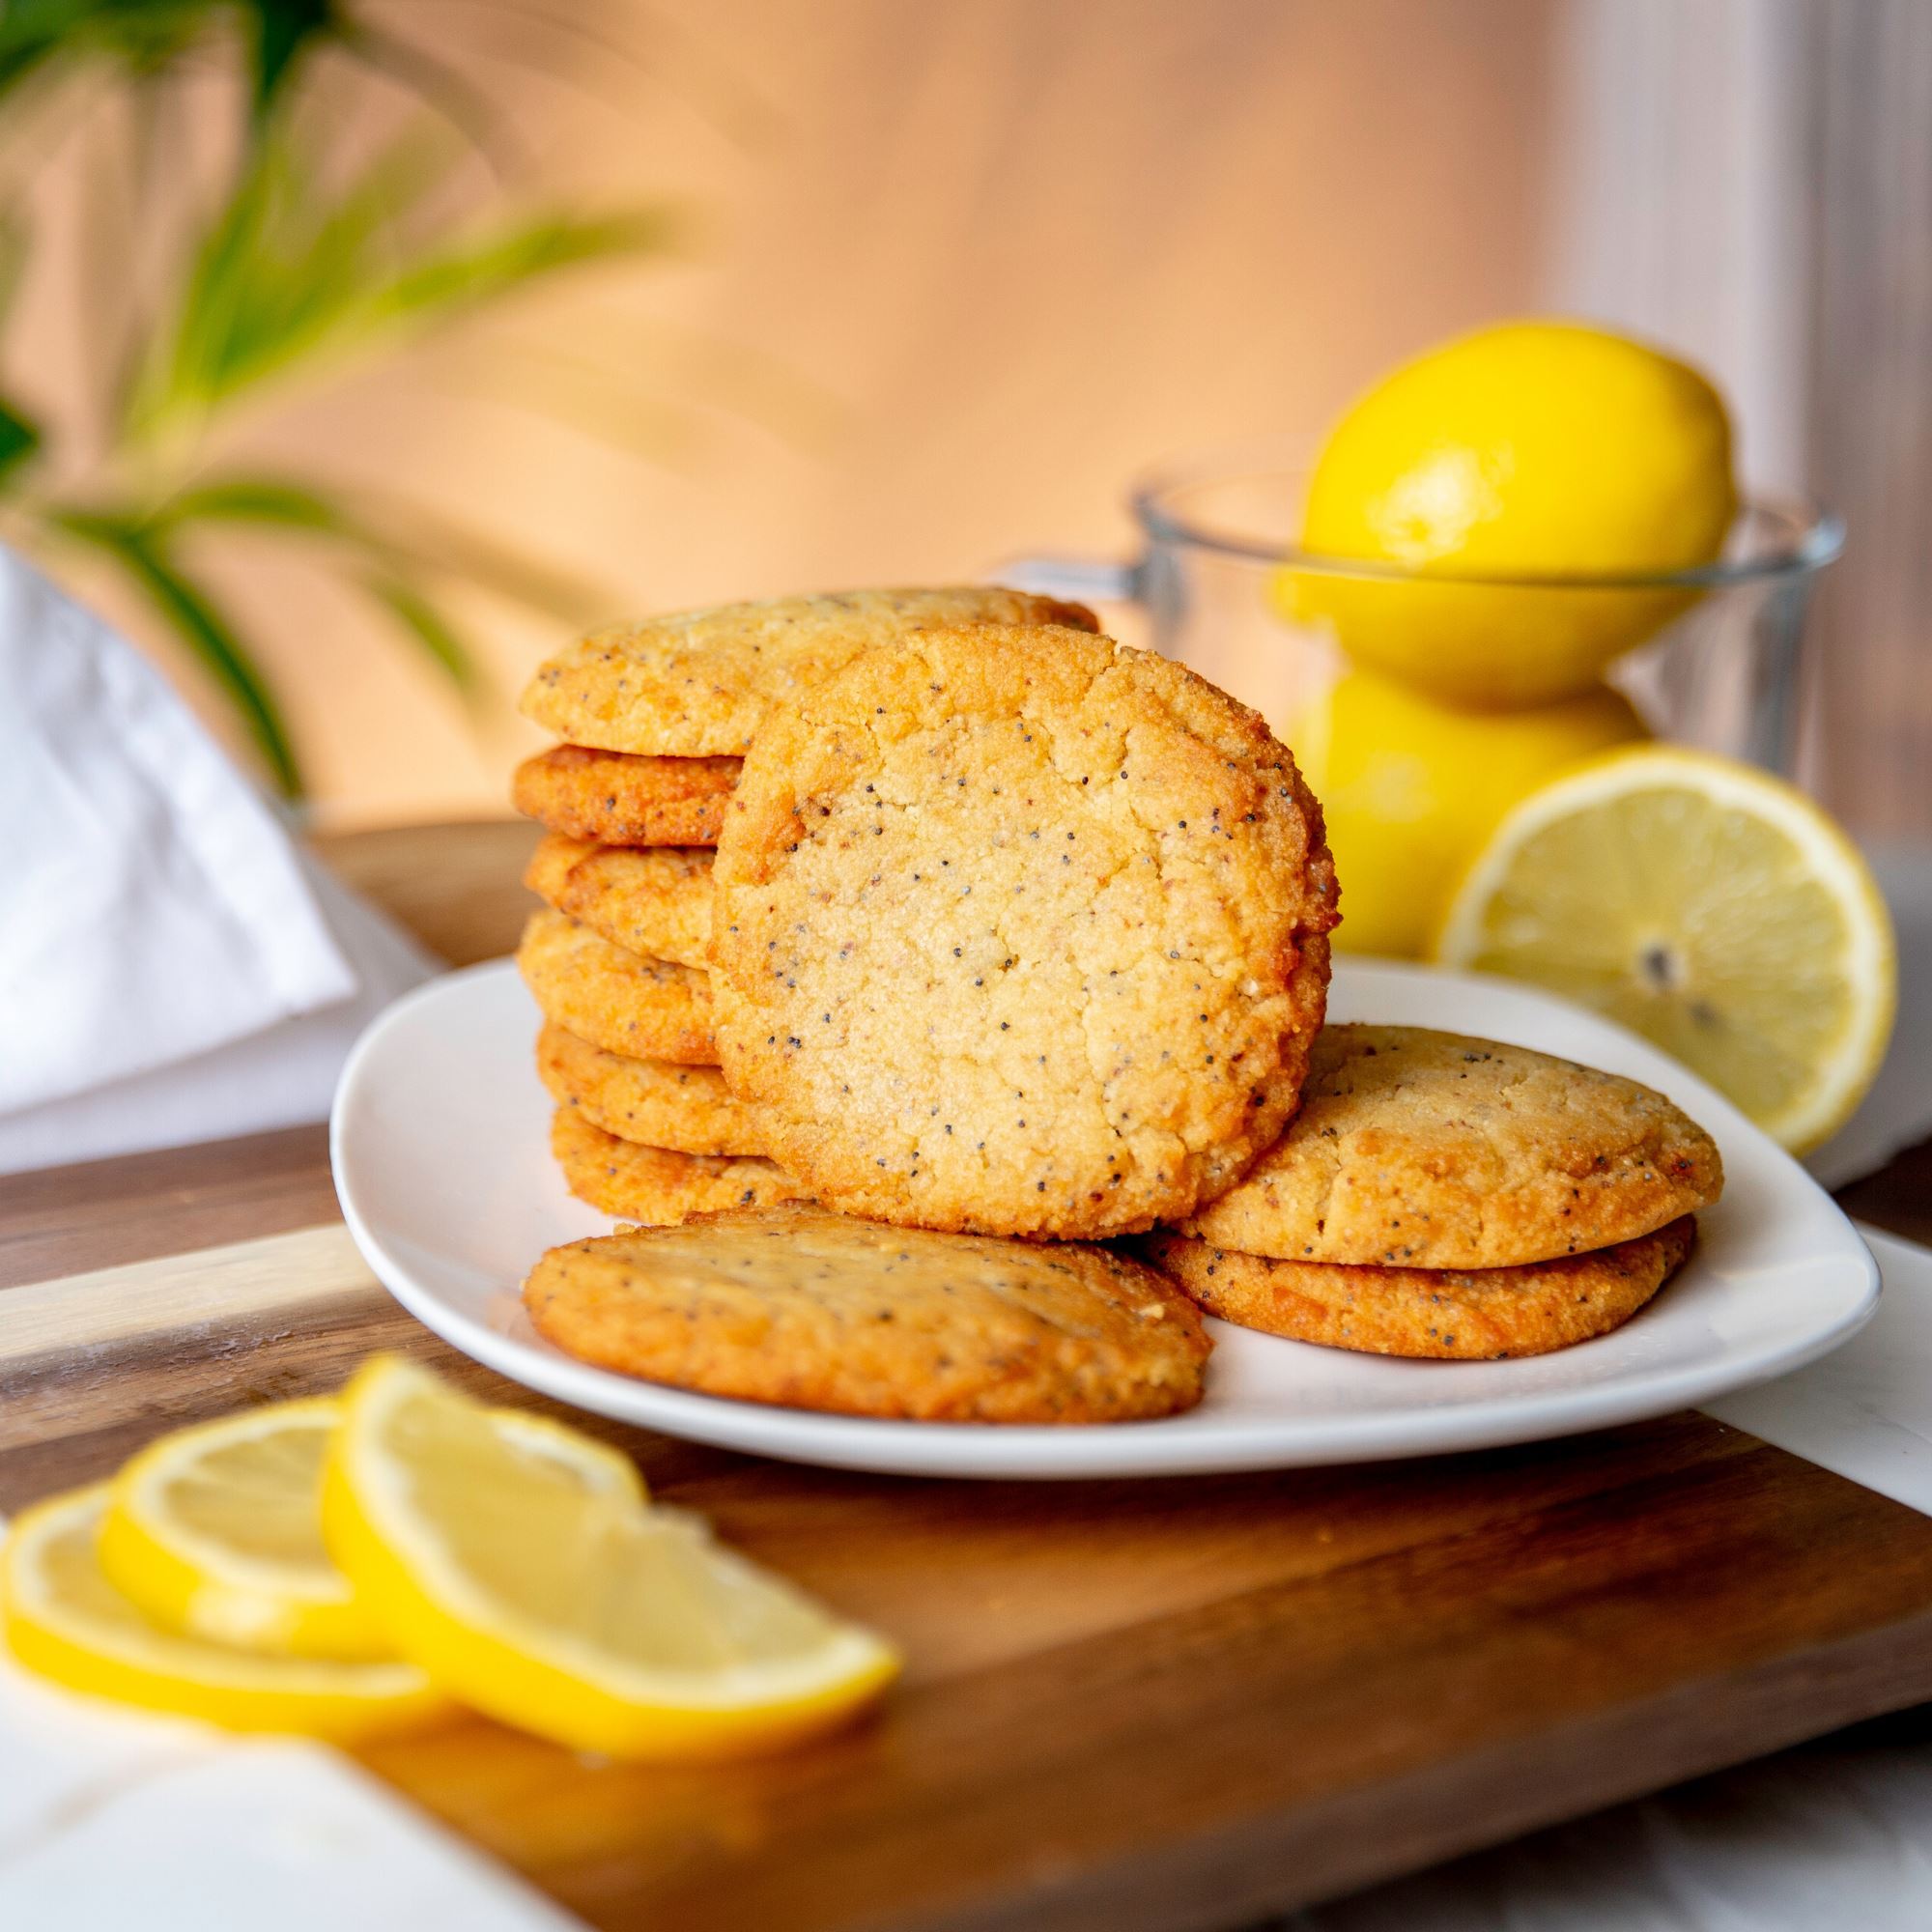 Lemon Poppyseed Keto Cookies - ChipMonk Baking - Consumerhaus